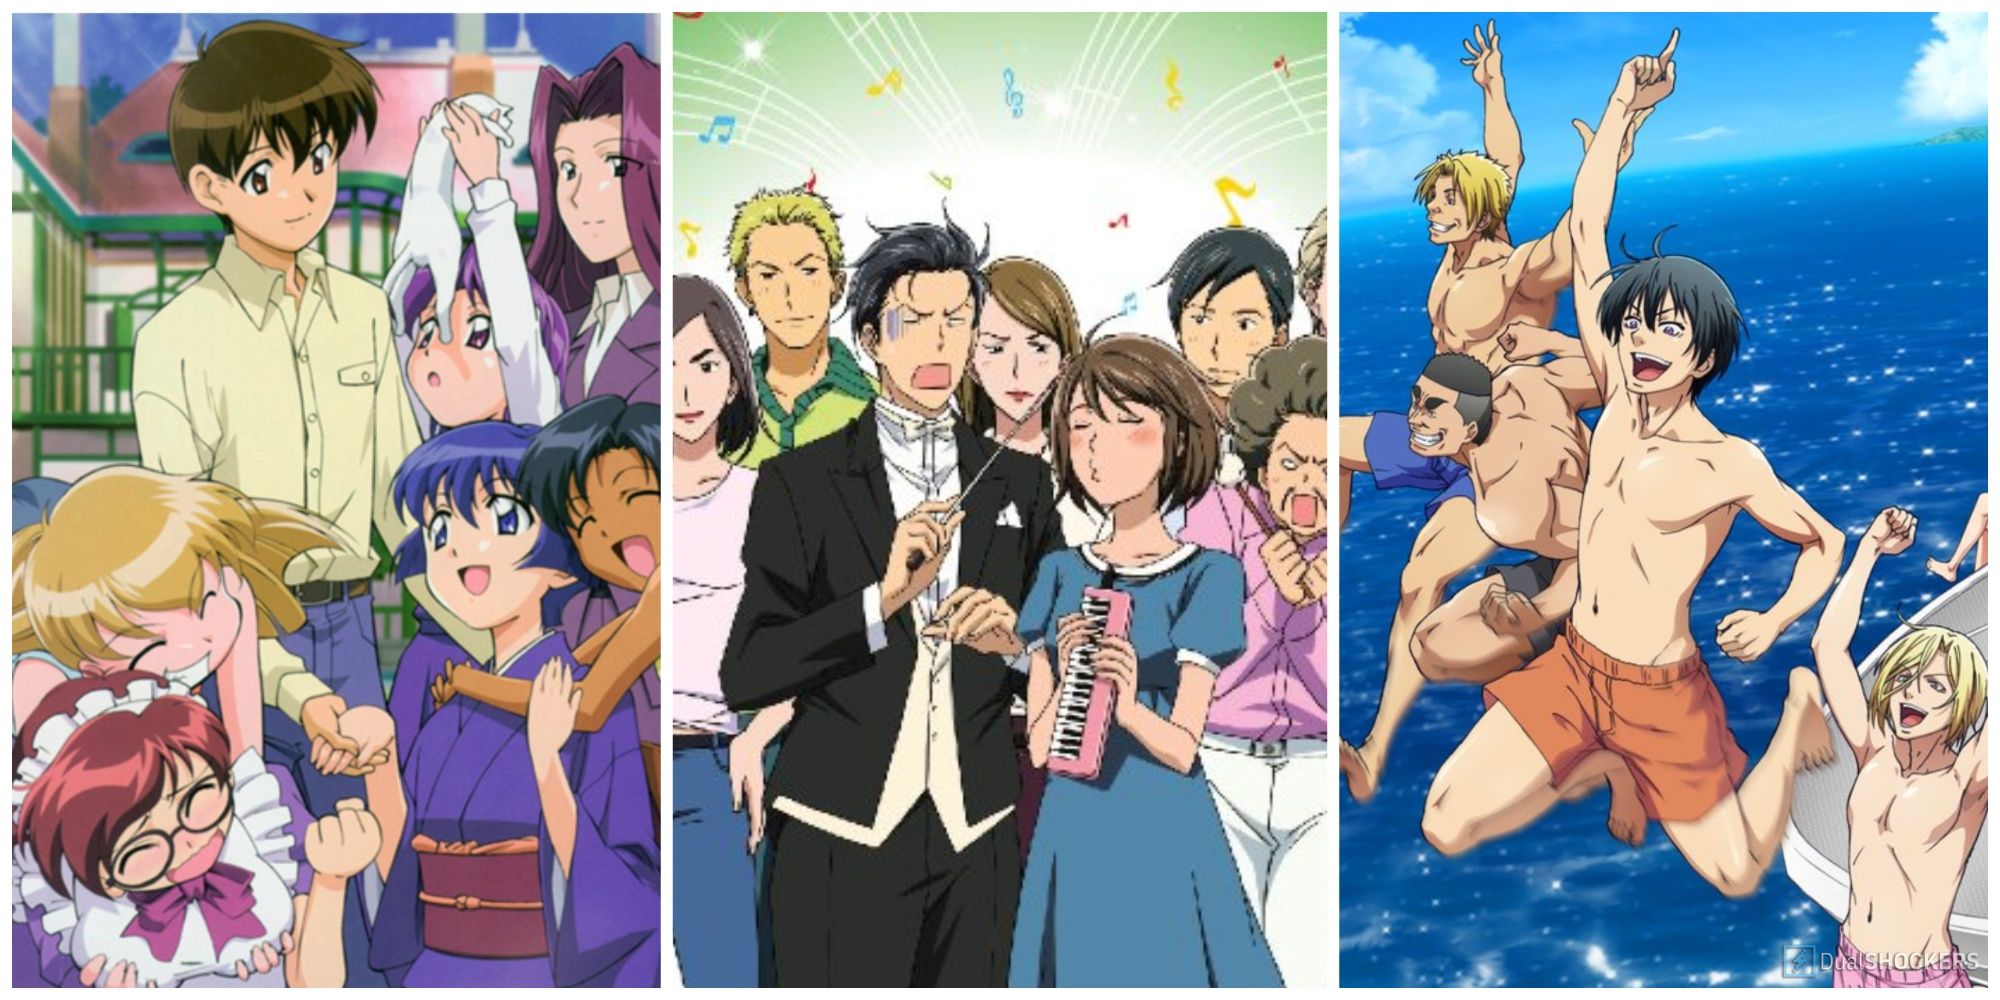 Split image group character screenshots of characters from Ai Yori Aoshi, Nodame Cantabile, and Grand Blue Anime Series